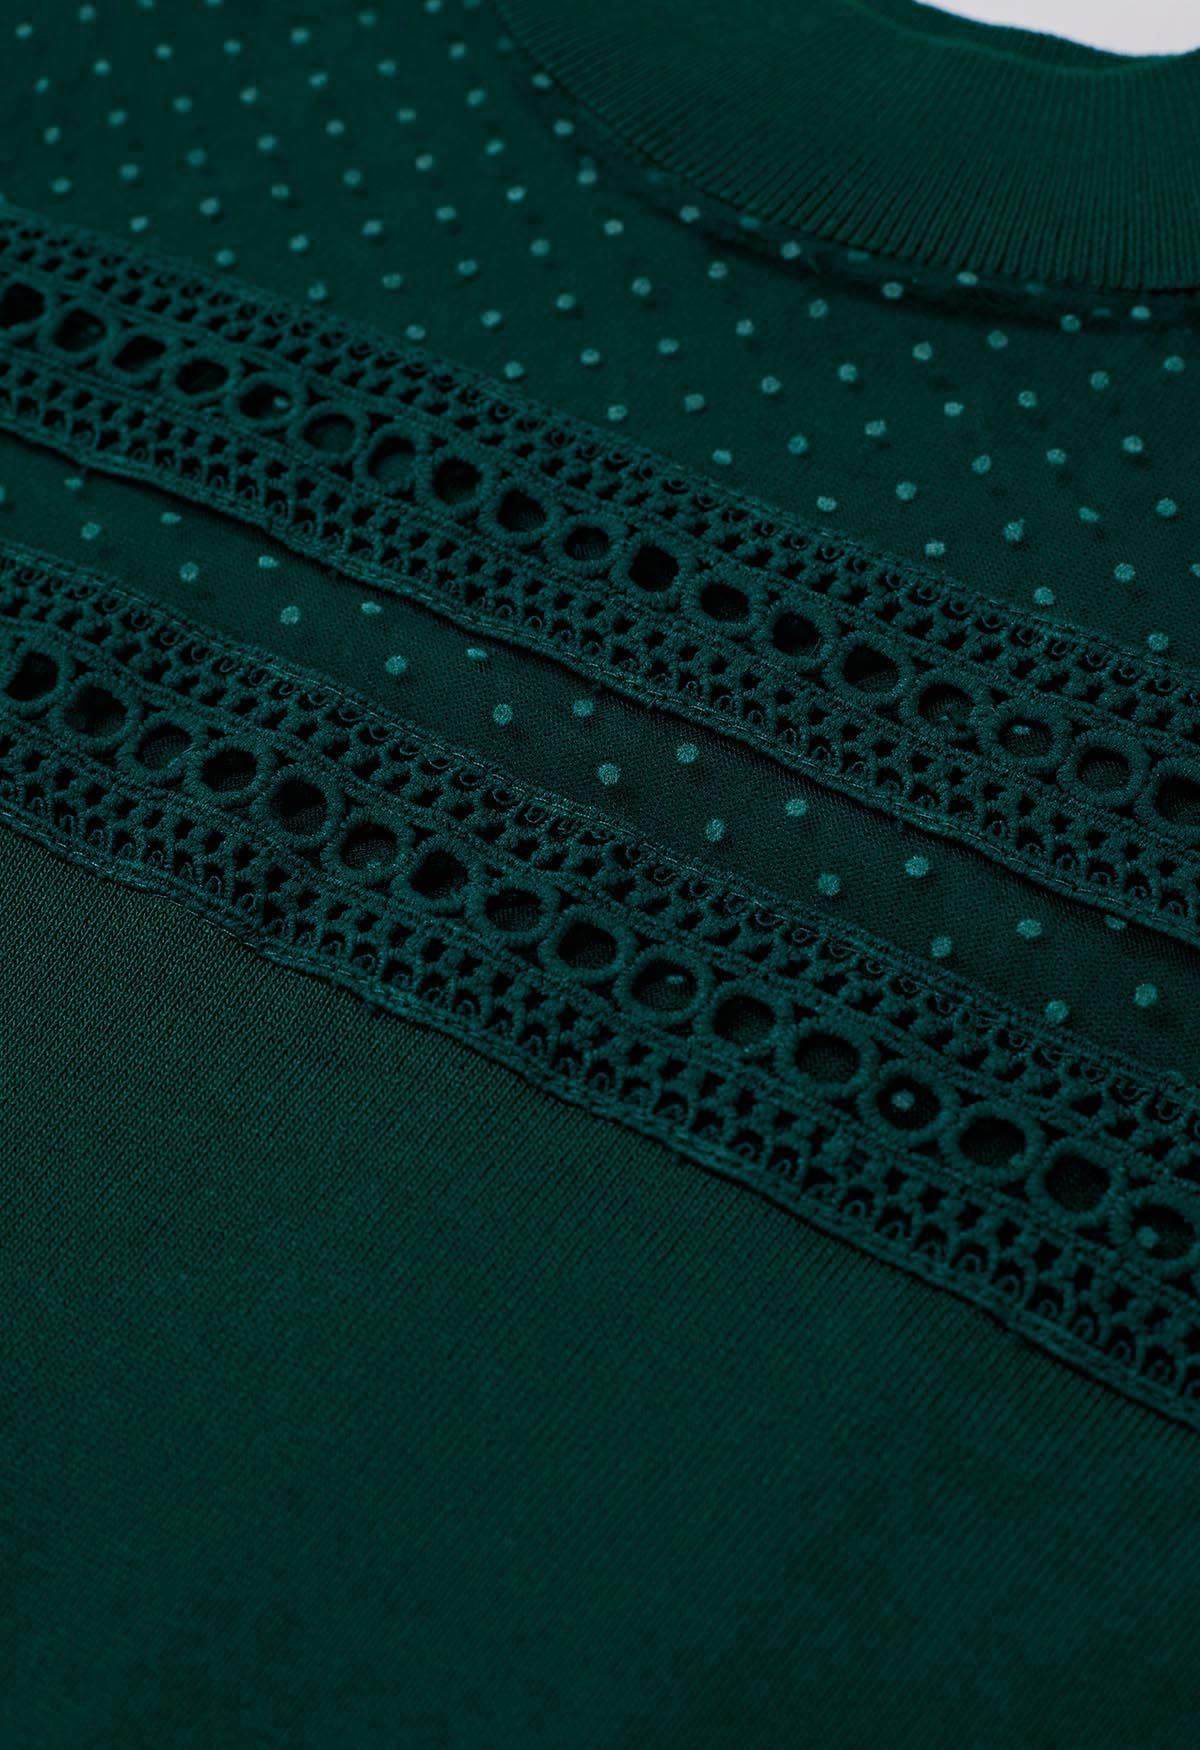 Flock Dots Mesh Spliced Knit Top in Emerald